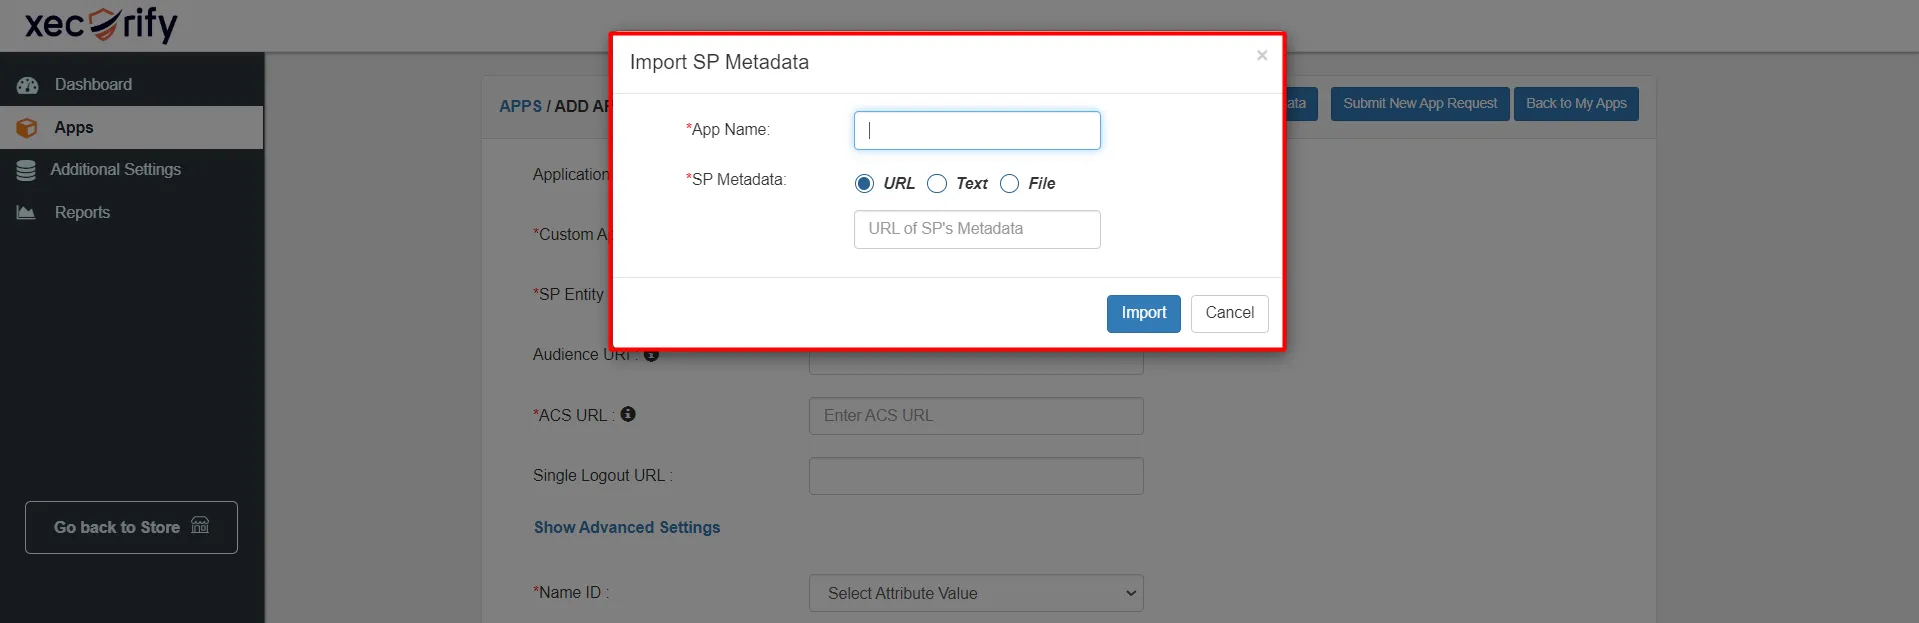 Shopify as IDP - Login using Shopify credentials - Enter SP Metadata